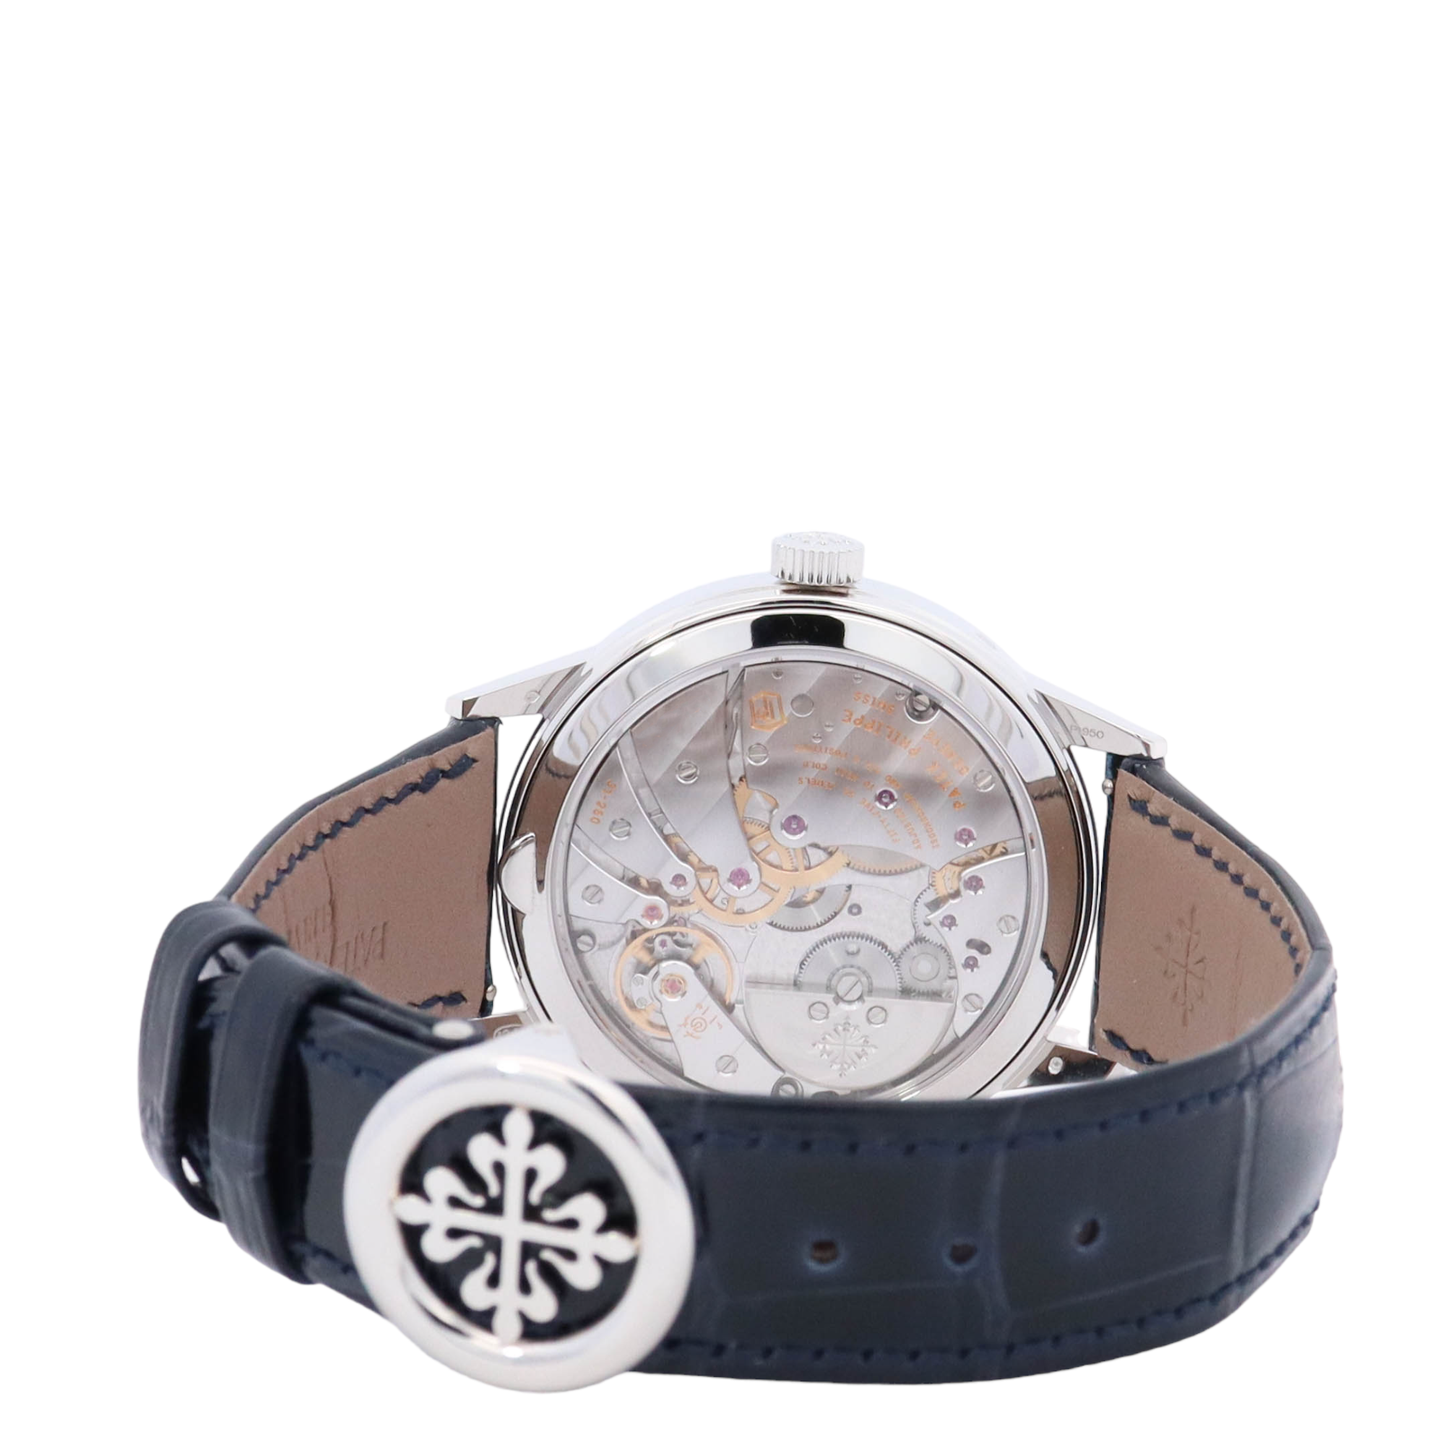 Patek Philippe | Luxury watches for men, Fancy watches, Best watches for men